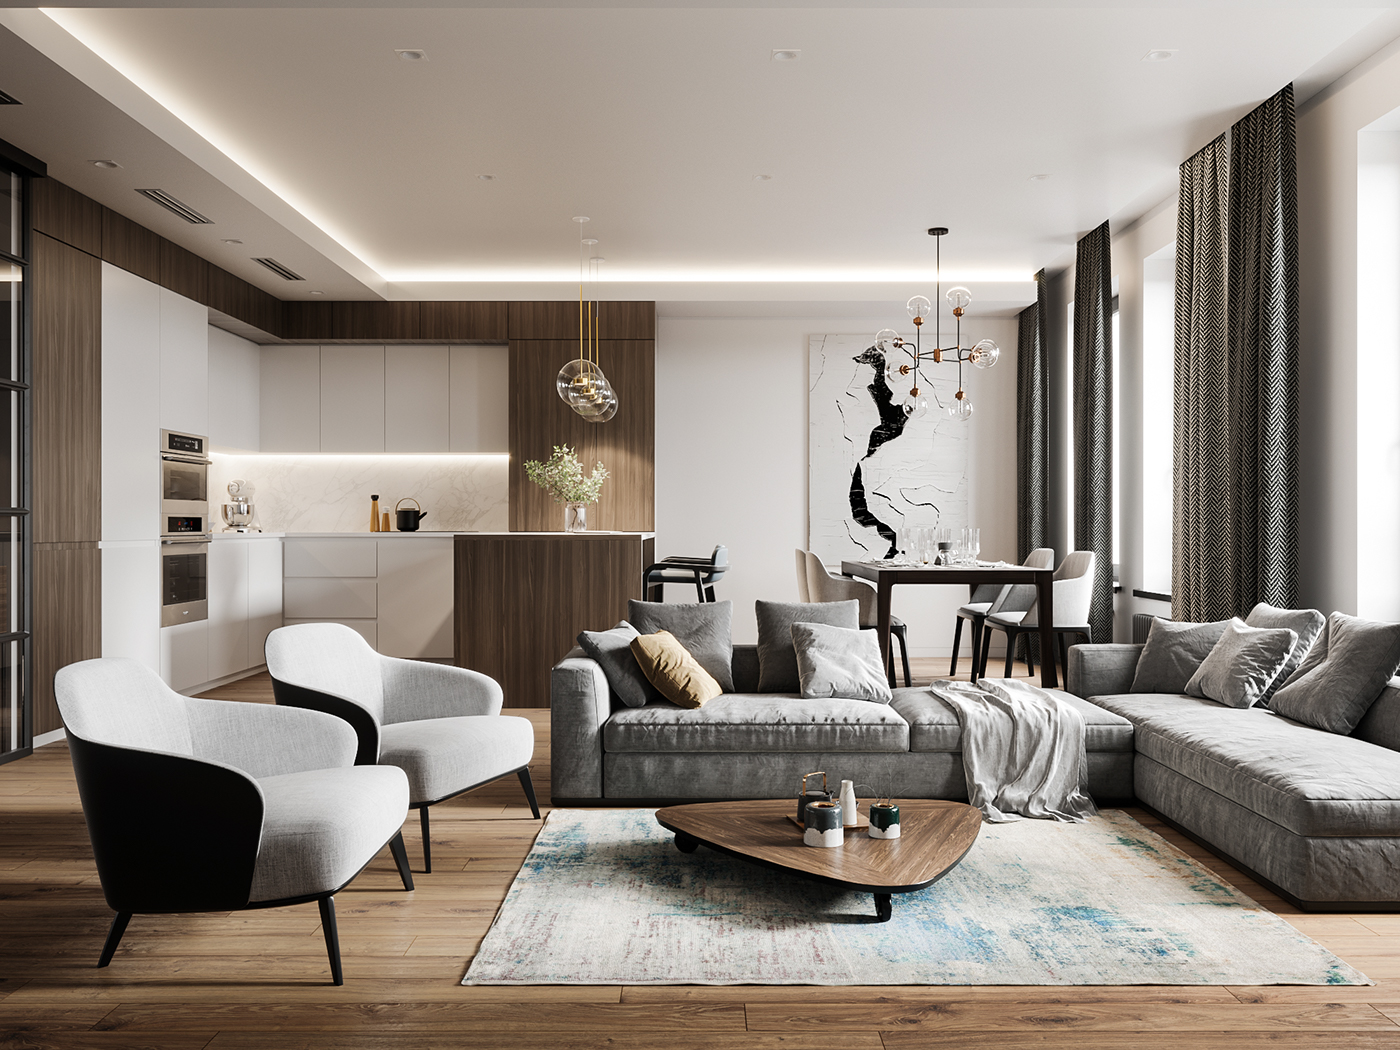 Apartment in minimalist style on Behance